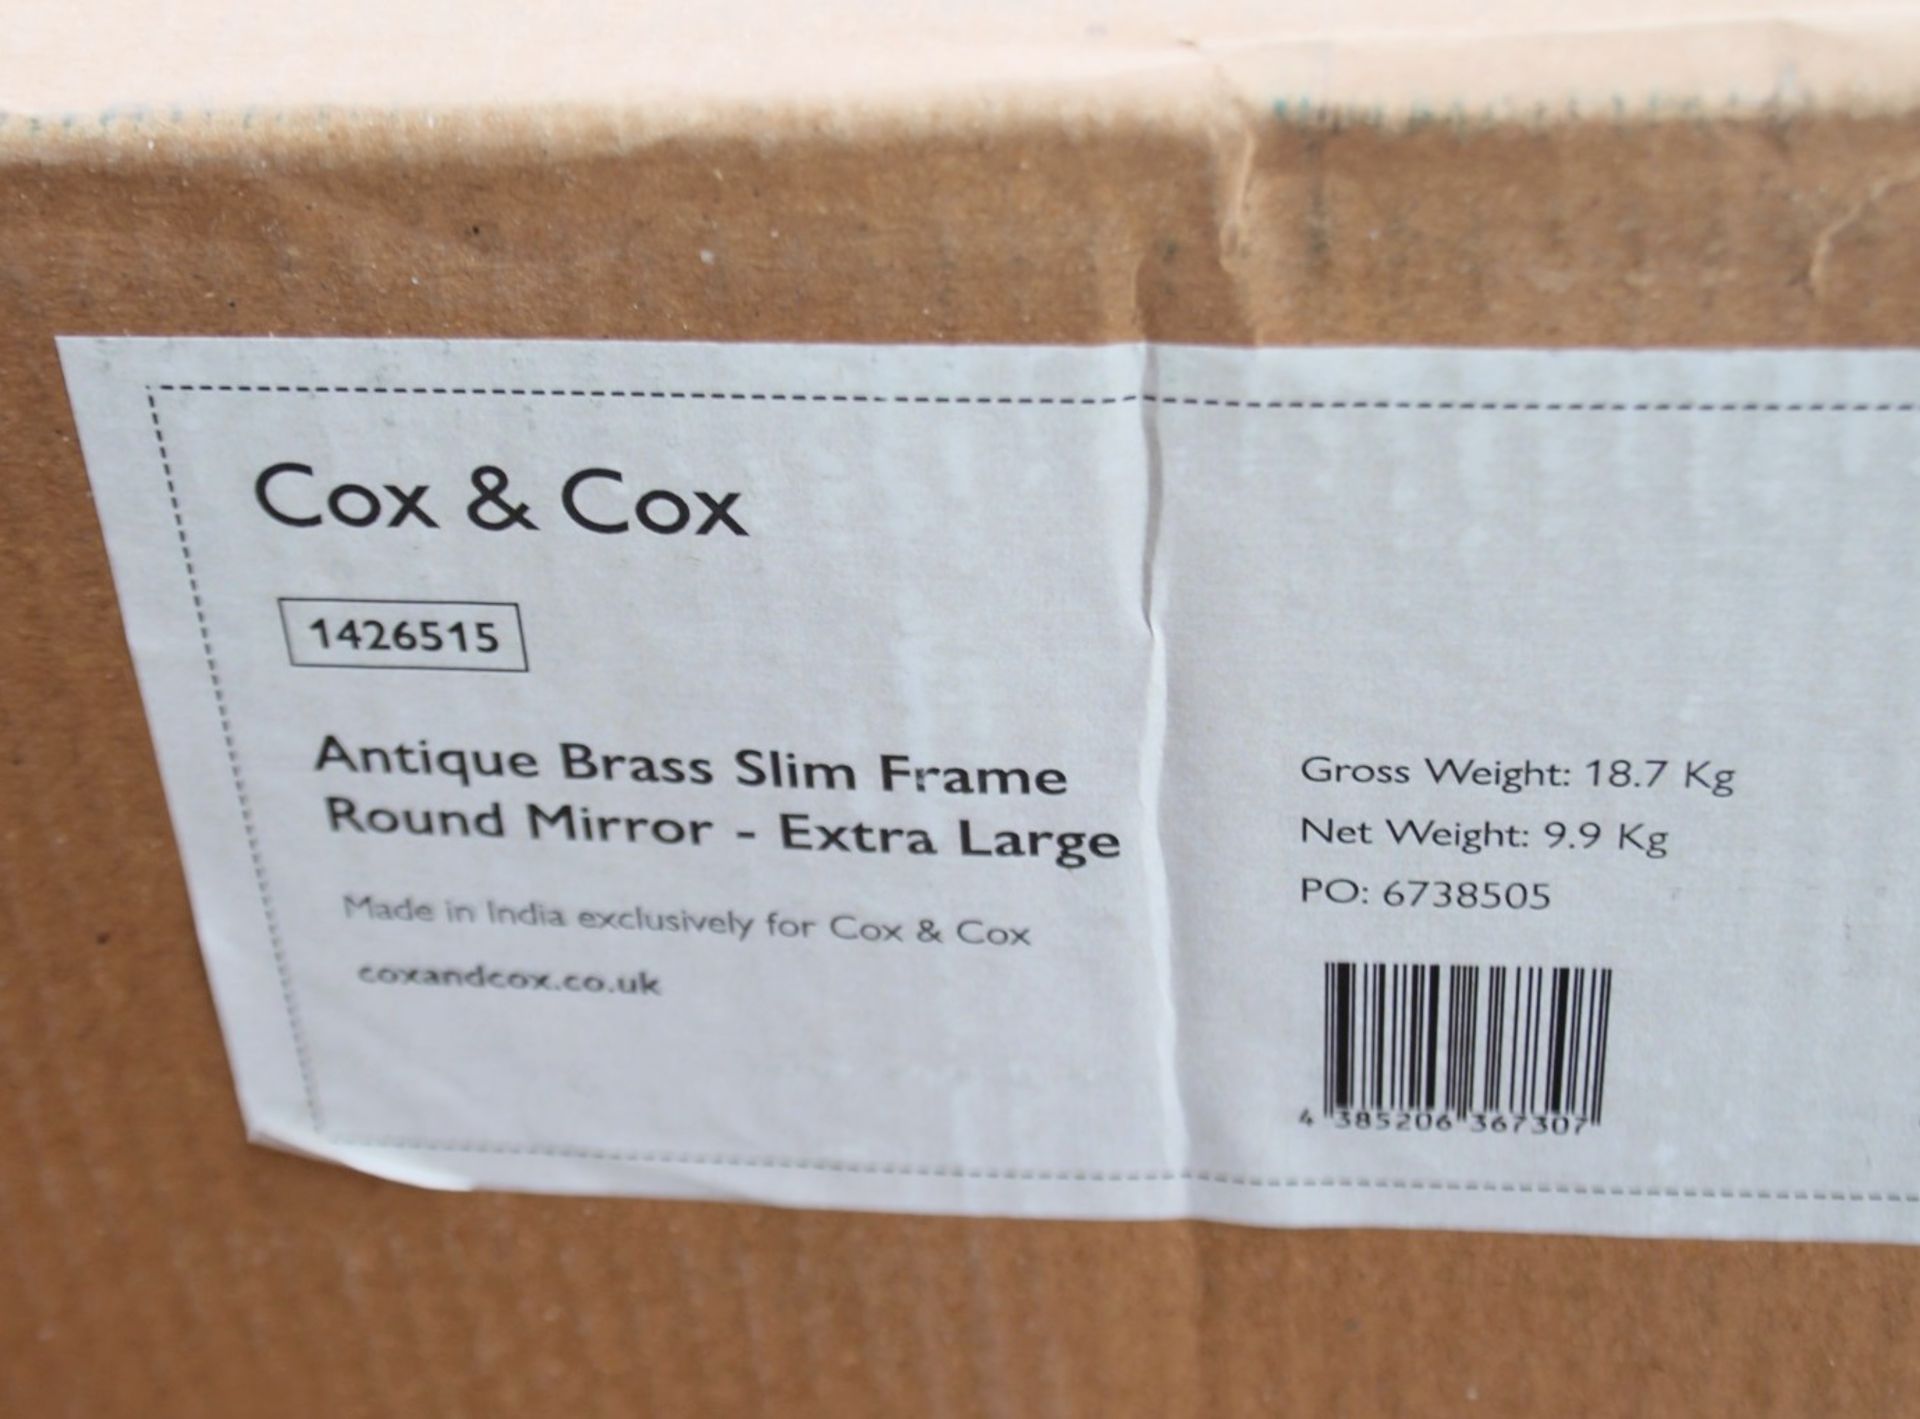 1 x COX & COX Antique Brass Slim Frame Extra Large Round Mirror - Original RRP £395.00 - Image 5 of 6